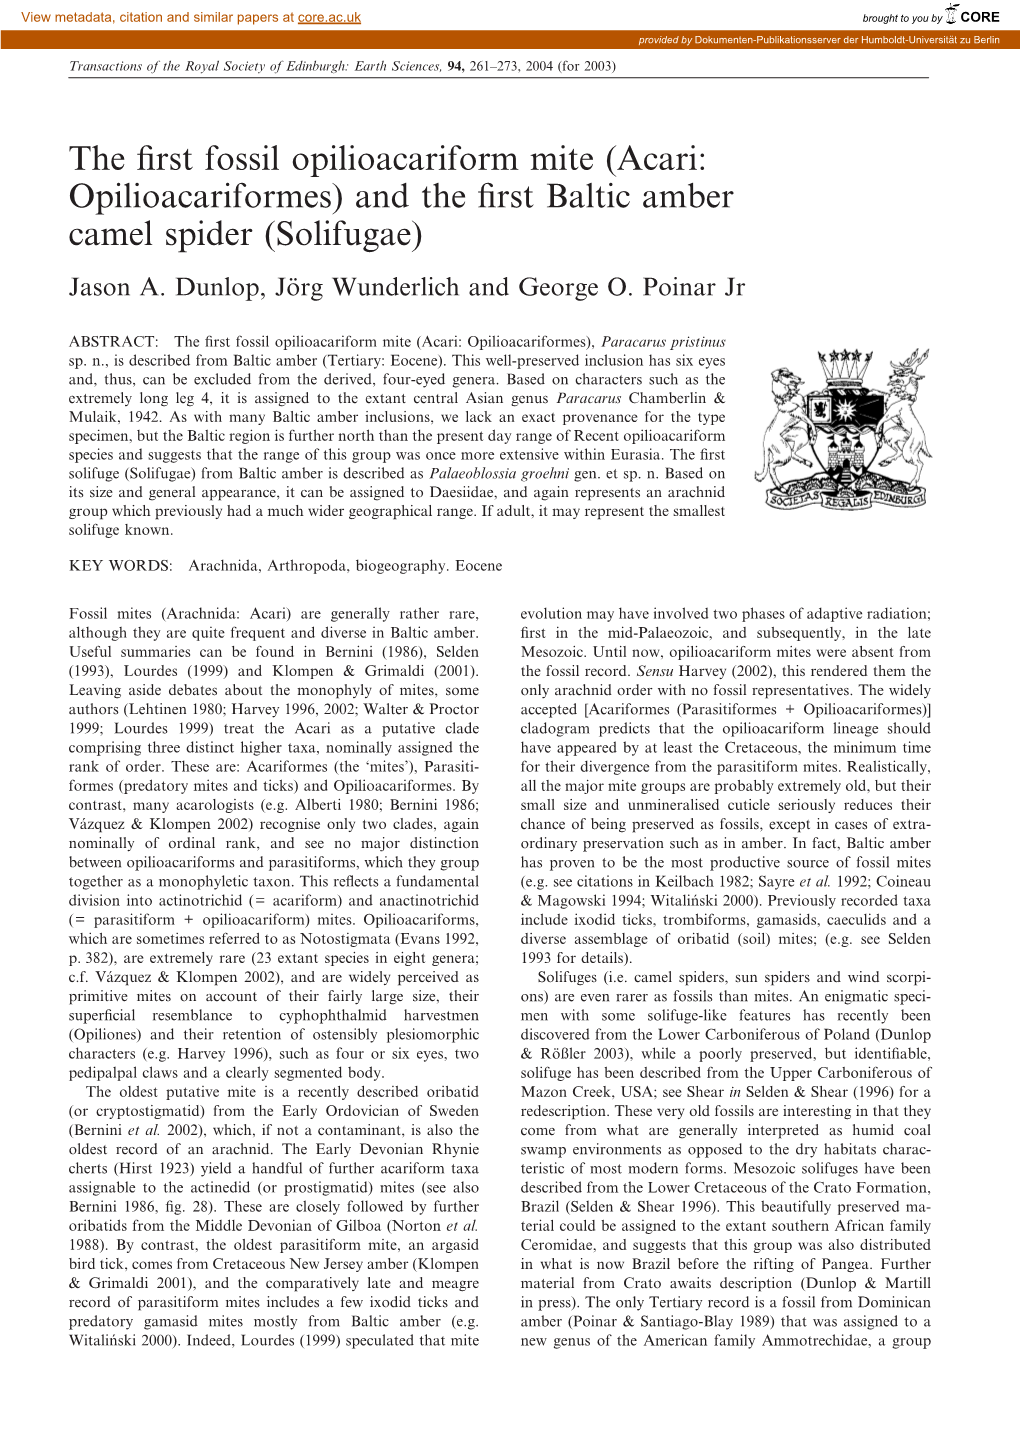 Acari: Opilioacariformes) and the ﬁrst Baltic Amber Camel Spider (Solifugae) Jason A